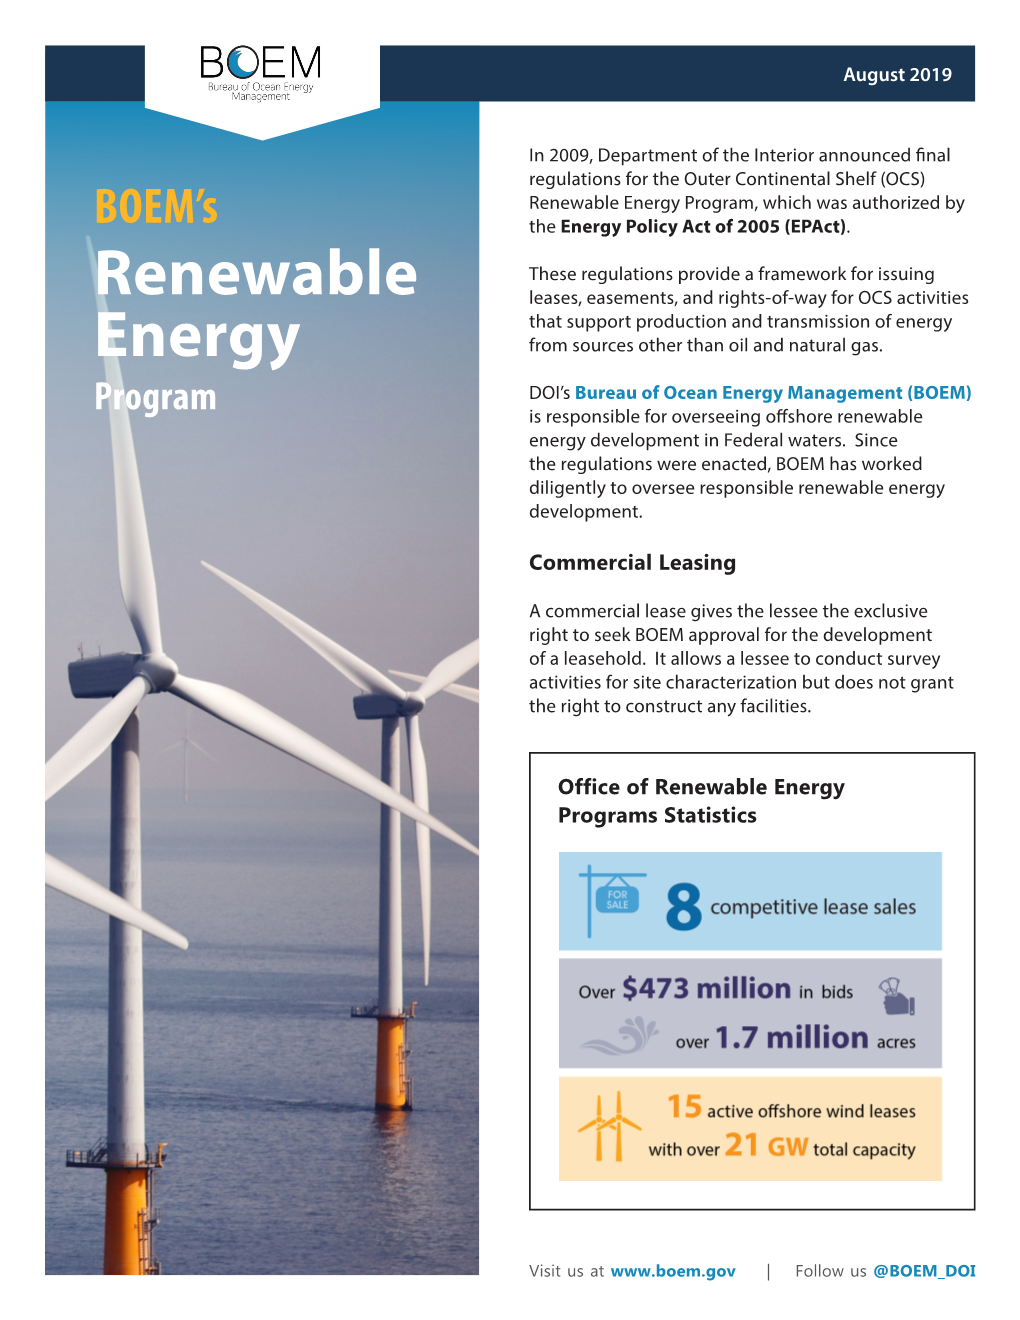 BOEM Renewable Energy Program